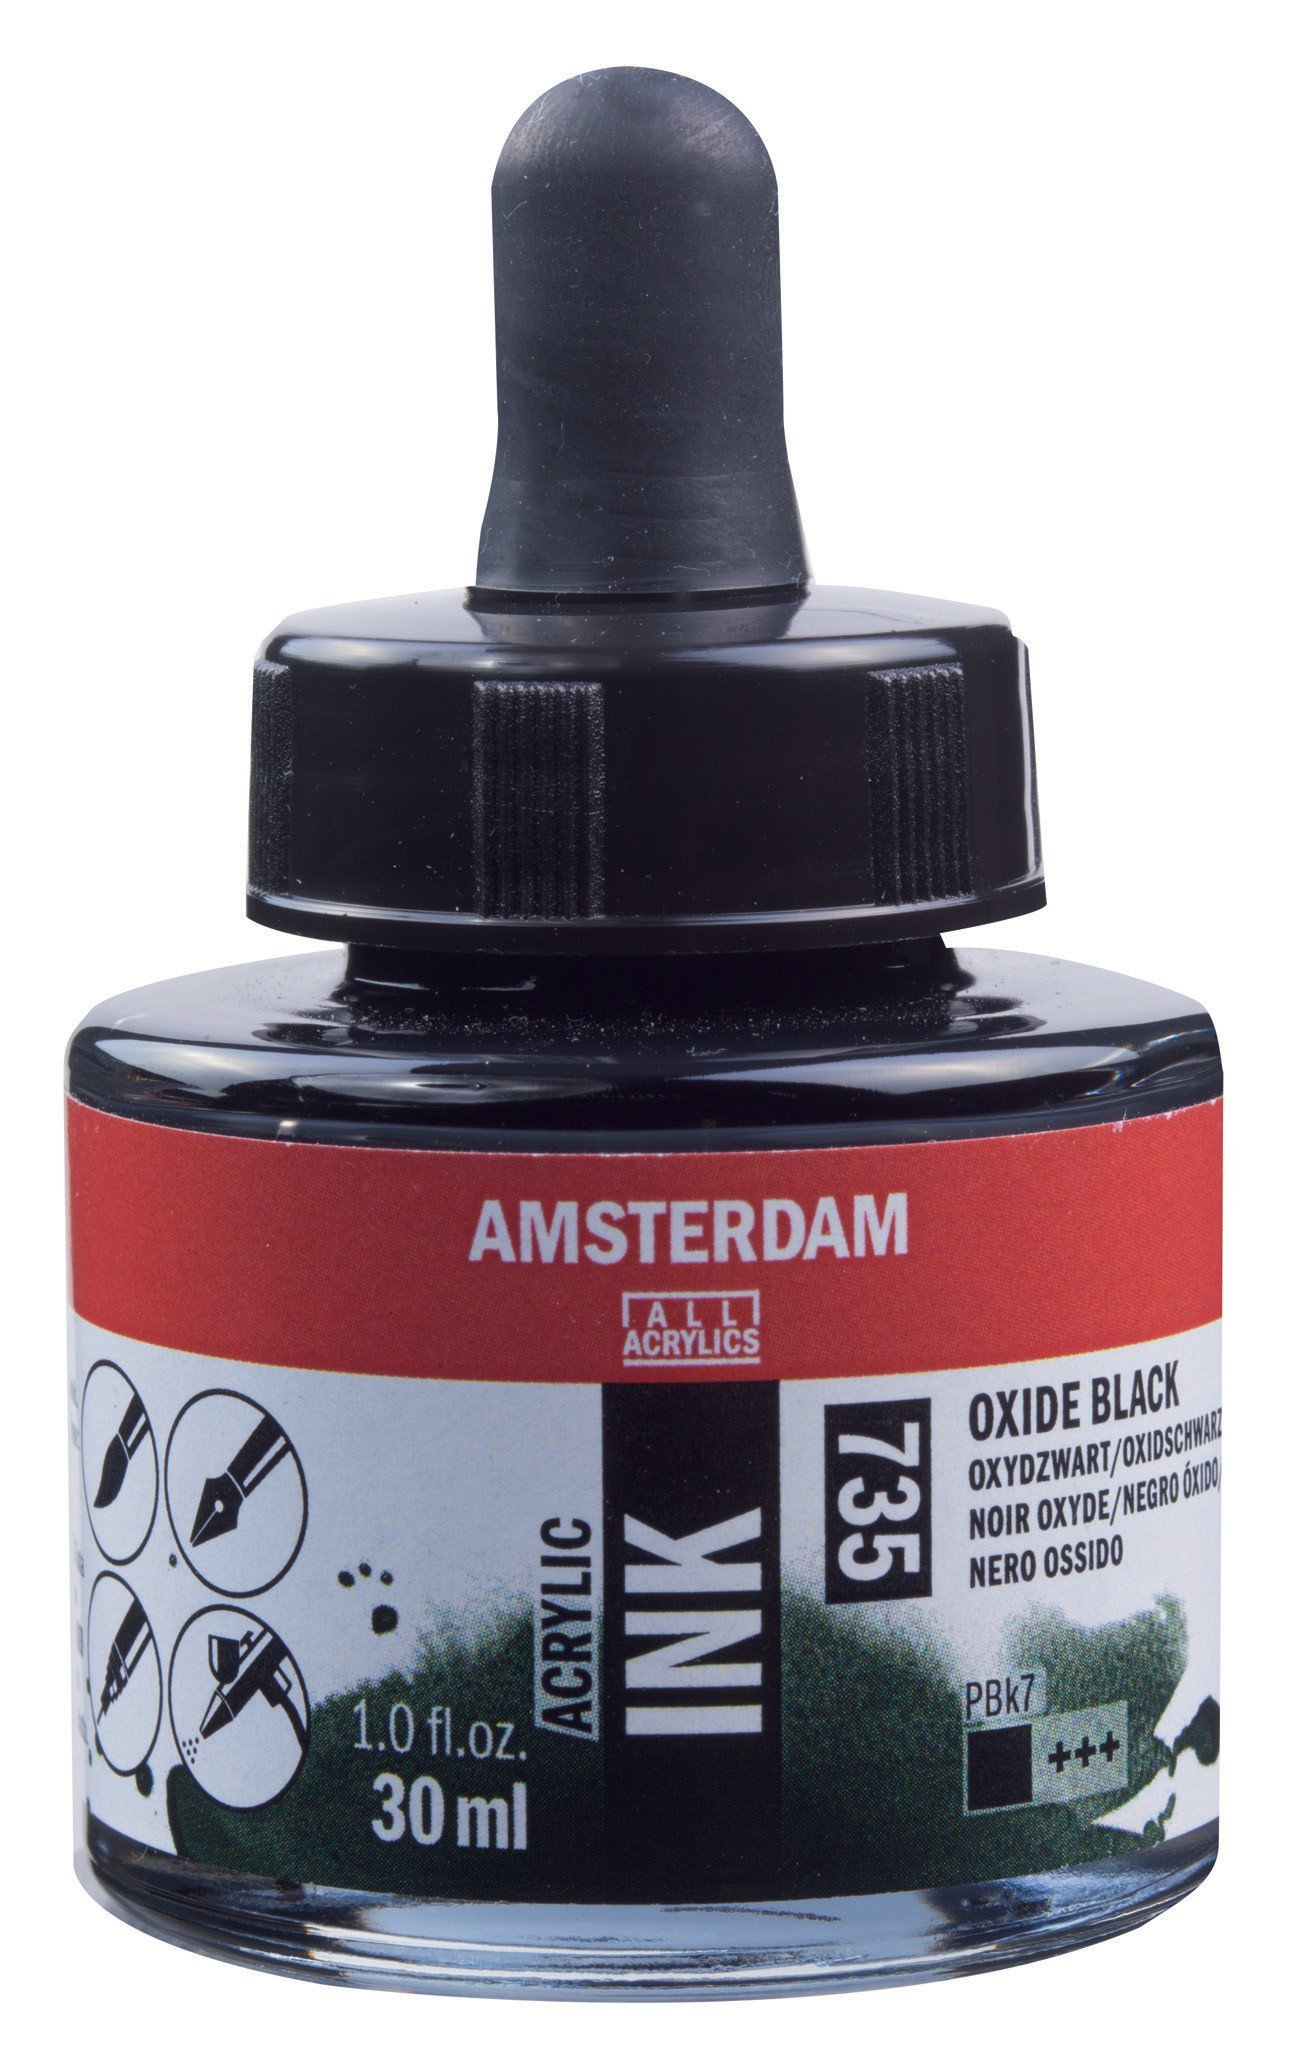 Amsterdam Sıvı Akrilik Mürekkep Boya 30ml 735 Oxide Black